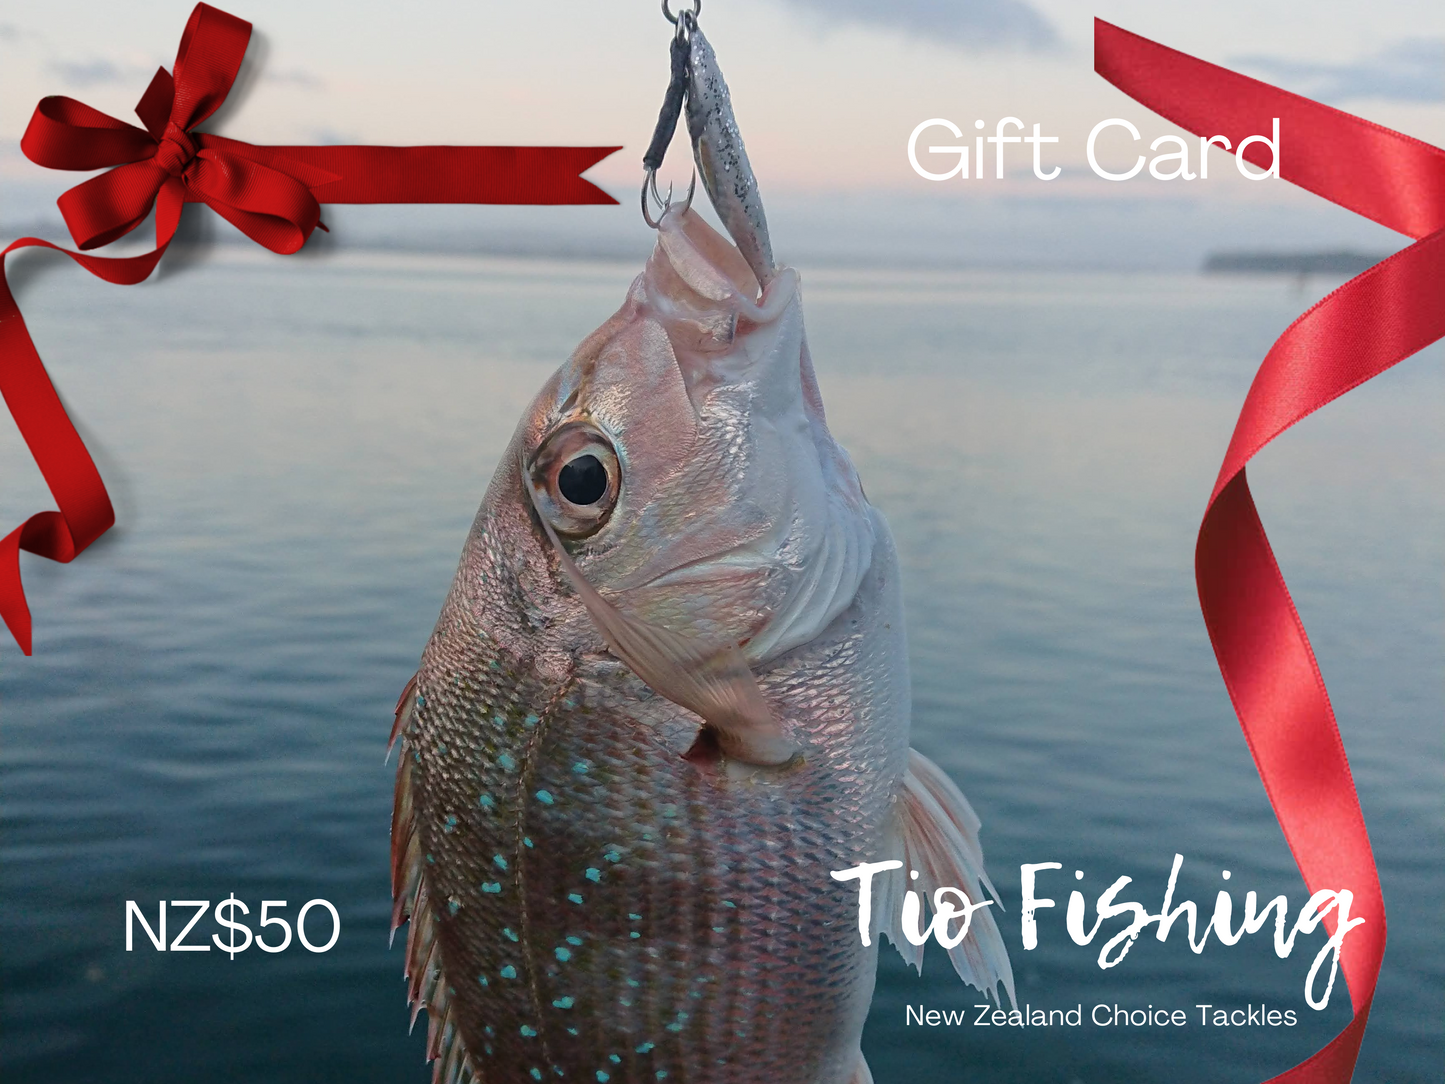 Tio Fishing Gift Card